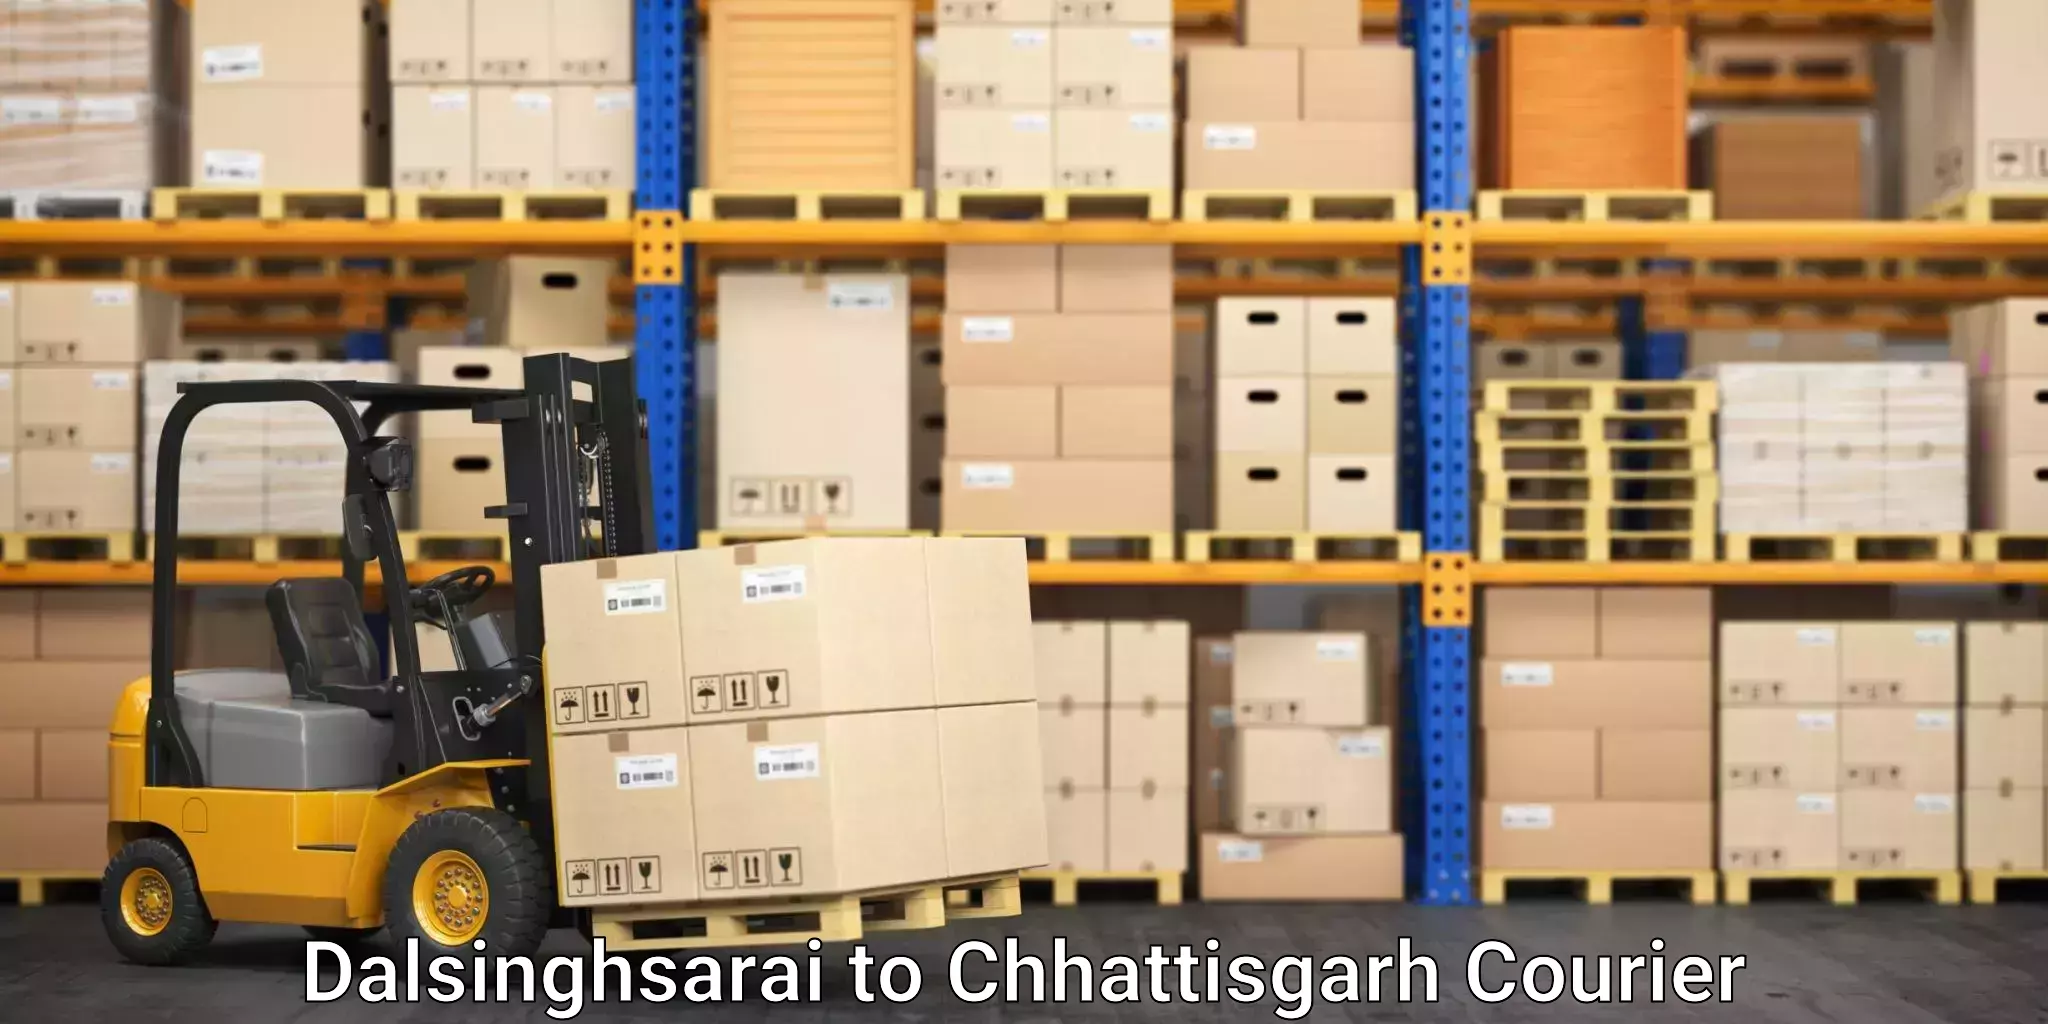 Furniture moving experts Dalsinghsarai to Patan Durg